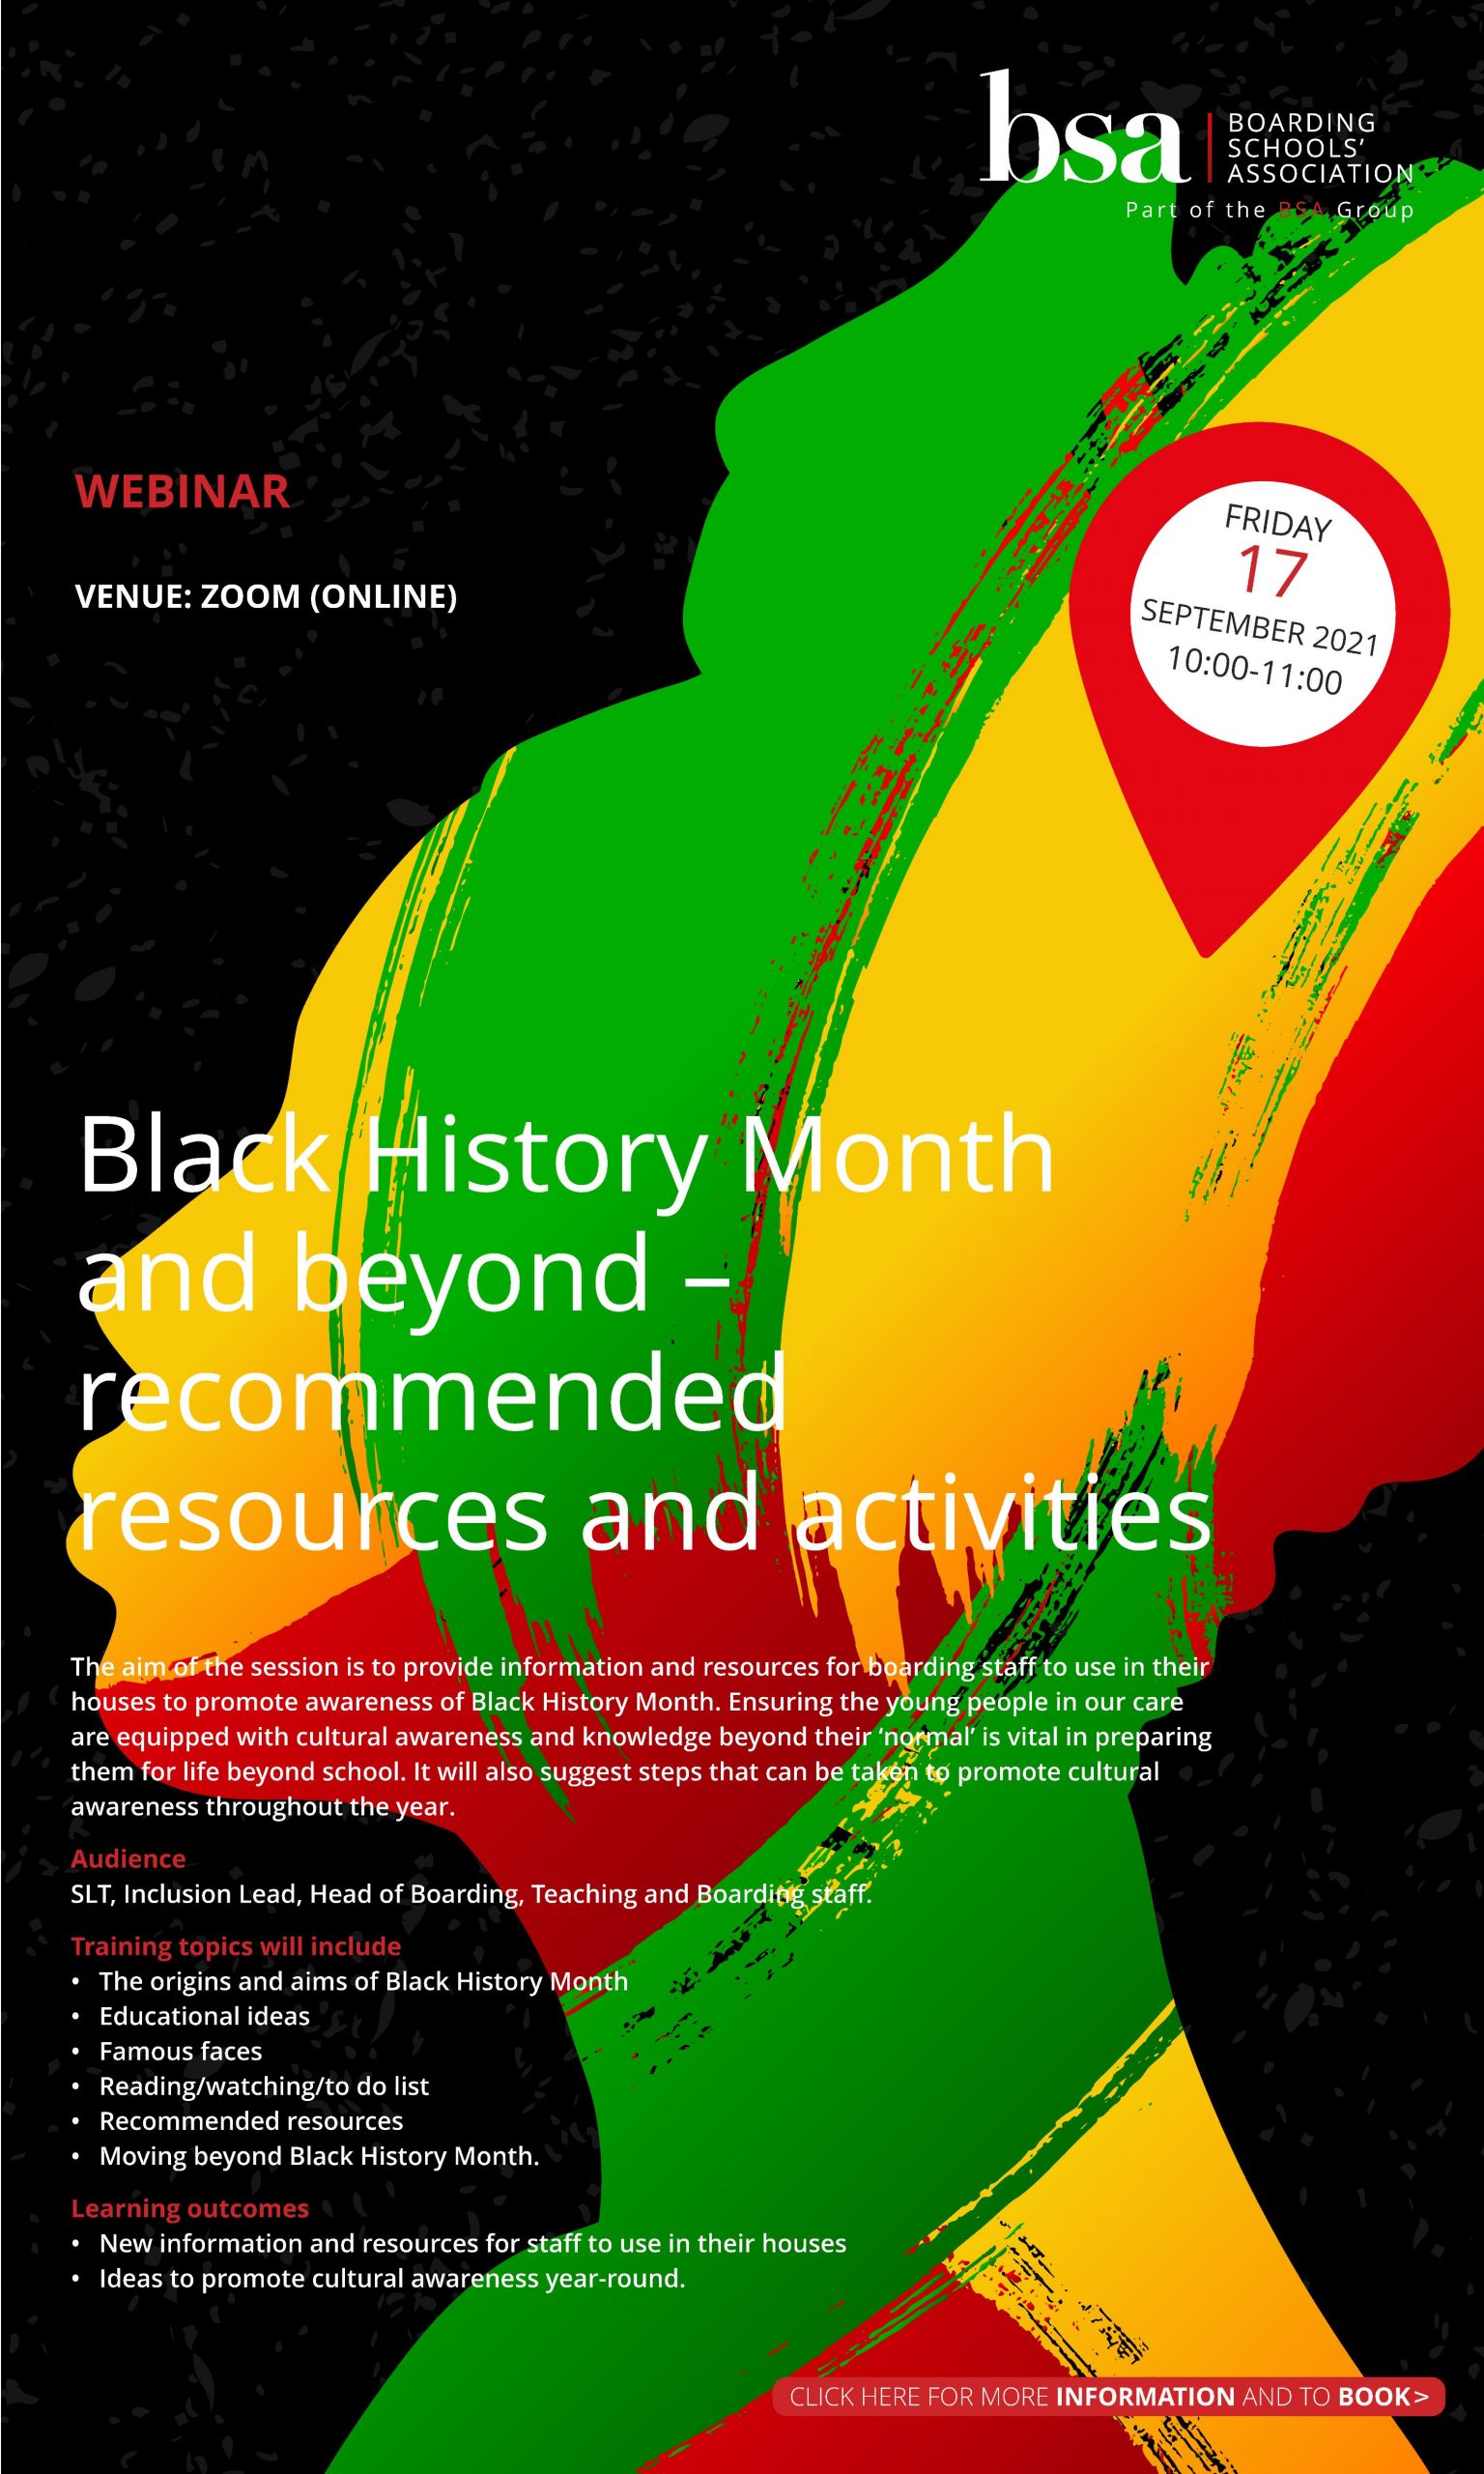 BSA Black History Month